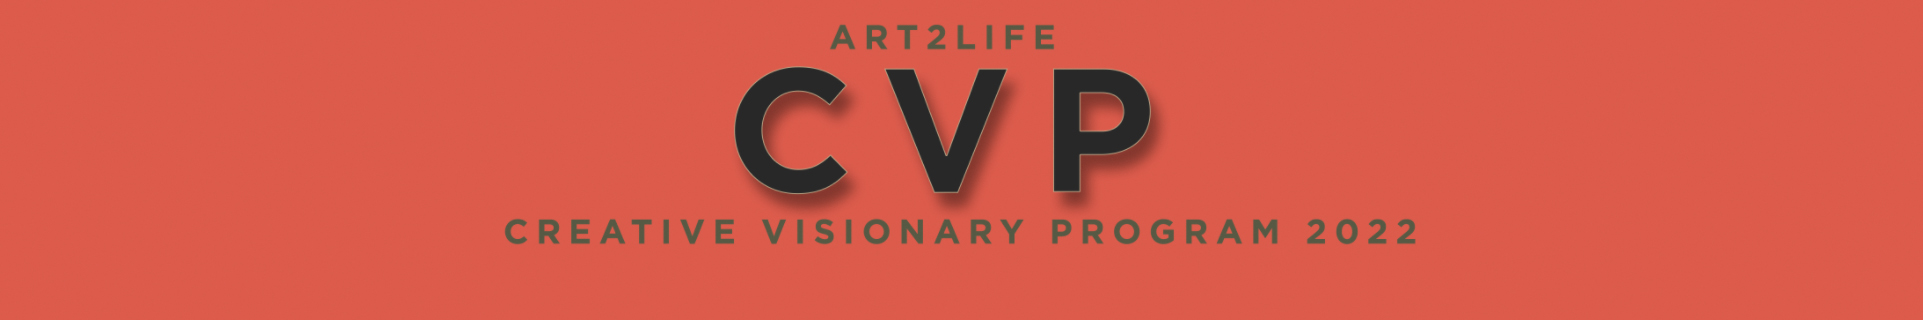 Art2Life CVP Creative Visionary Program 2022